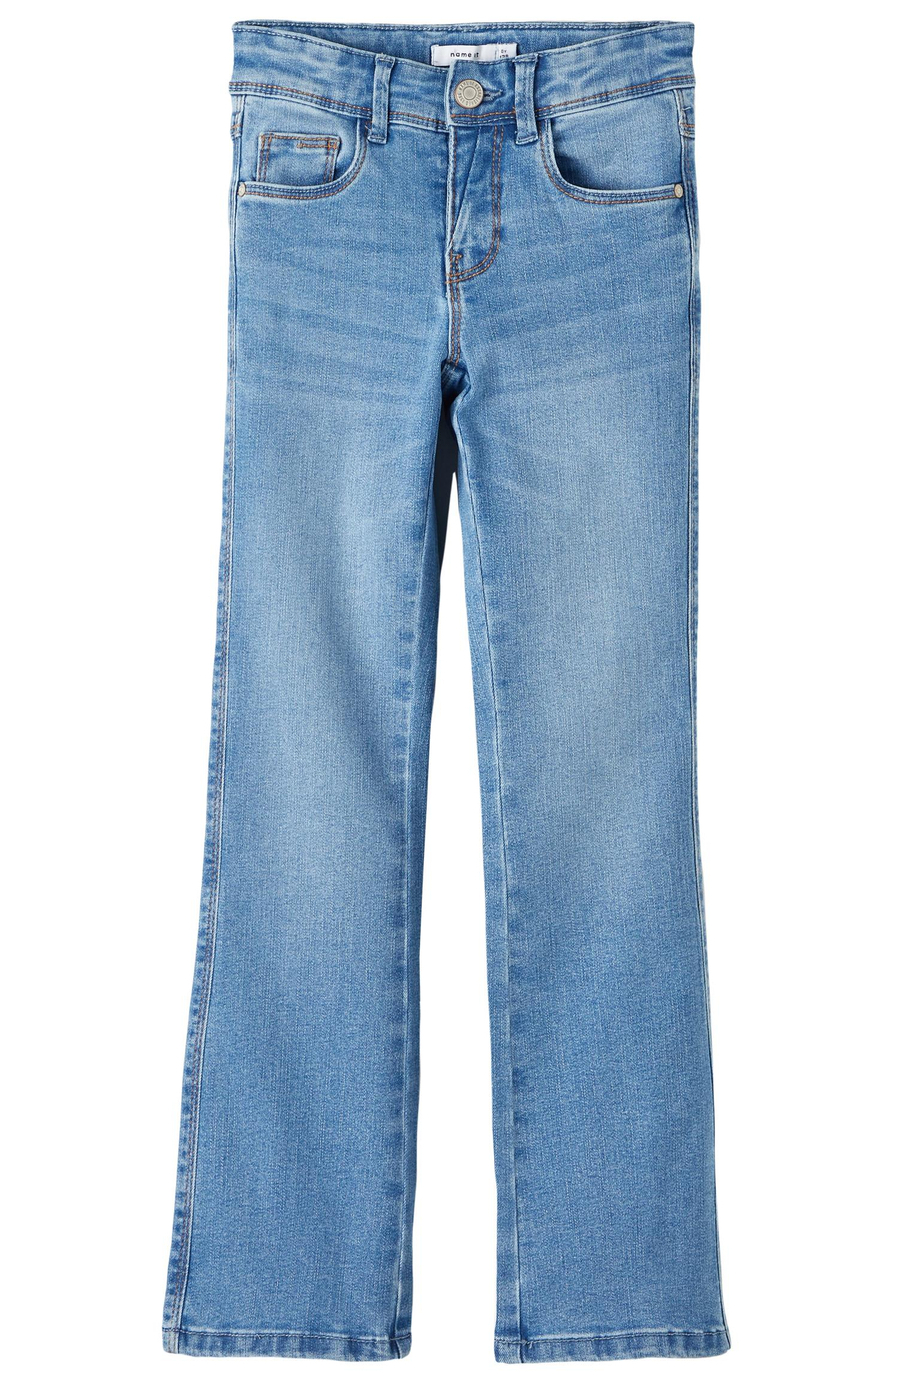 nkfpolly skinny boot jeans it blue denim medium jeans name 1142-au 13208876